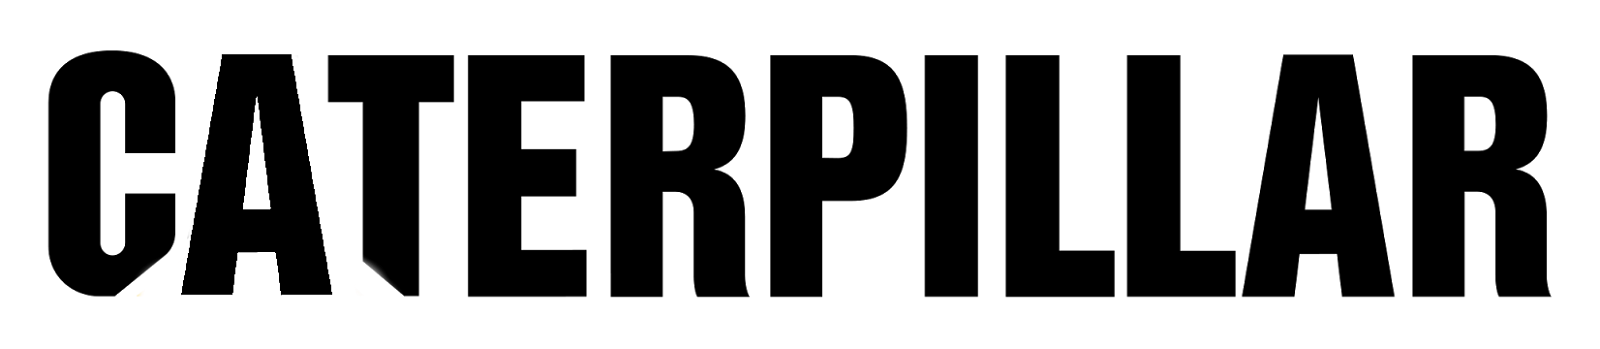 логотип_катерпиллар.png